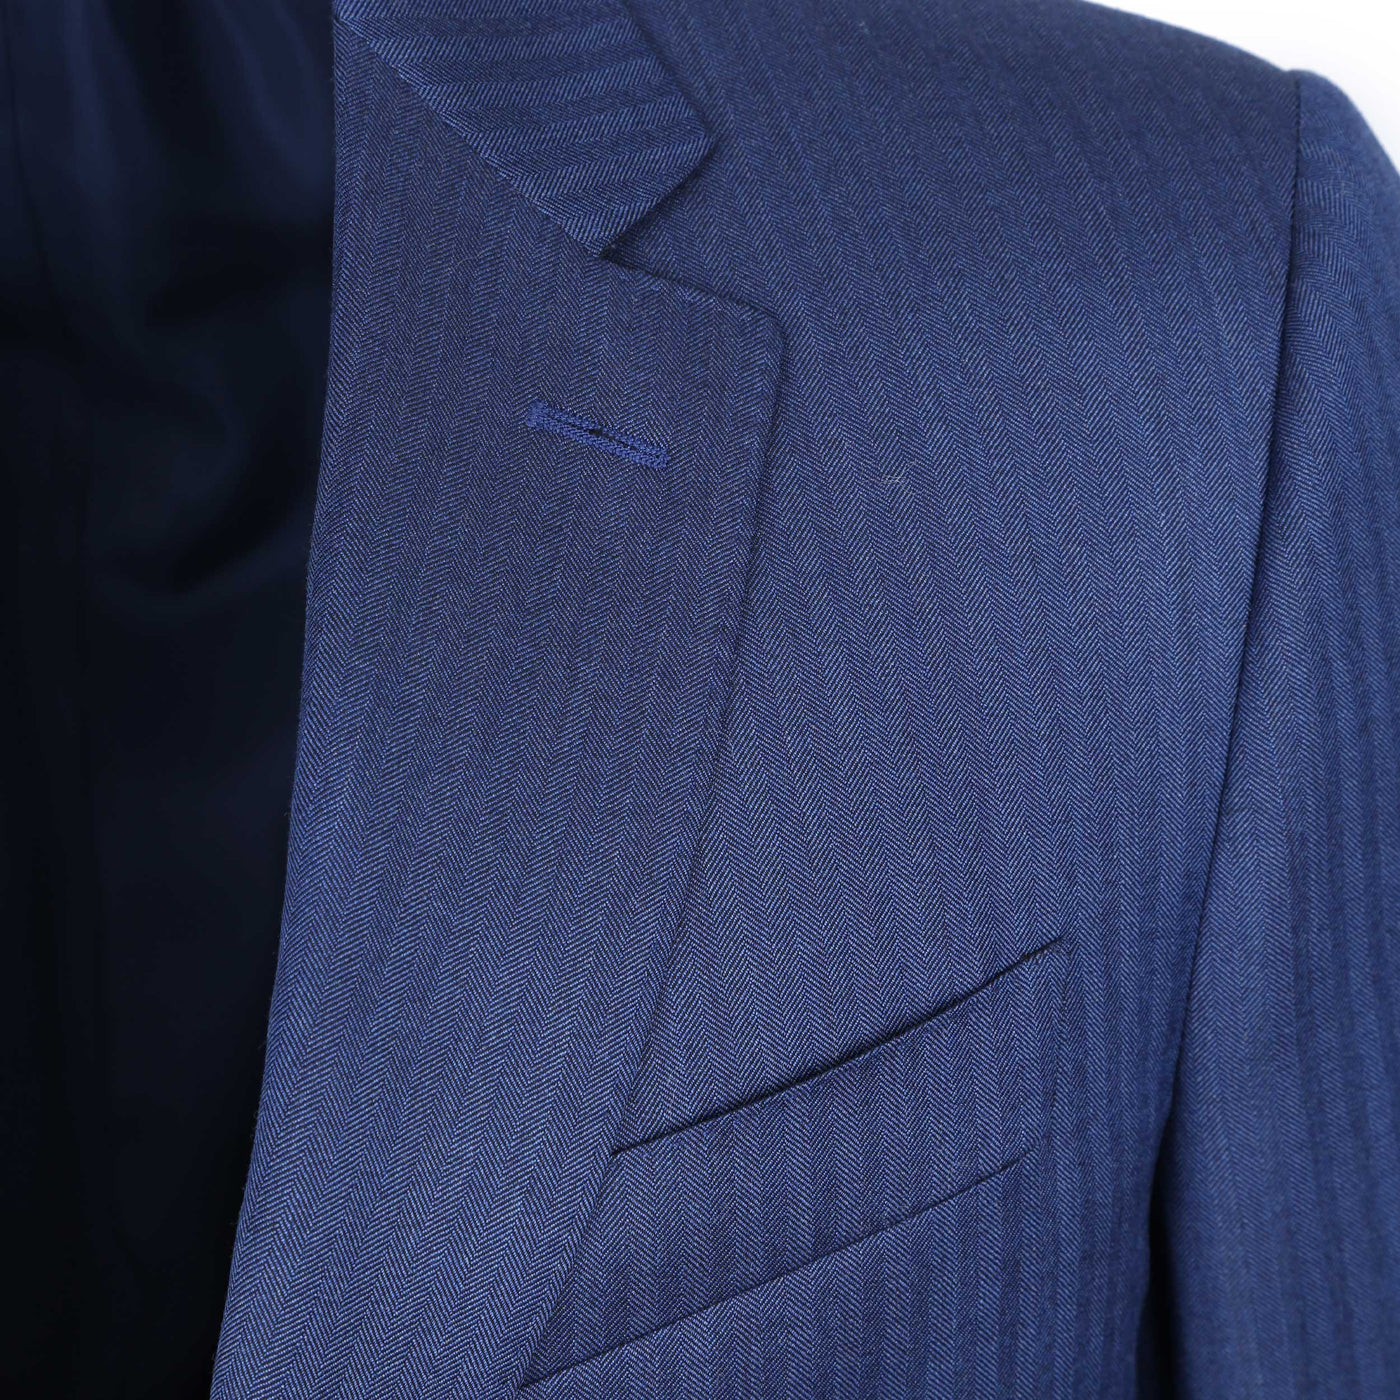 Canali Herringbone Notch Lapel Suit in Mid Blue Lapel